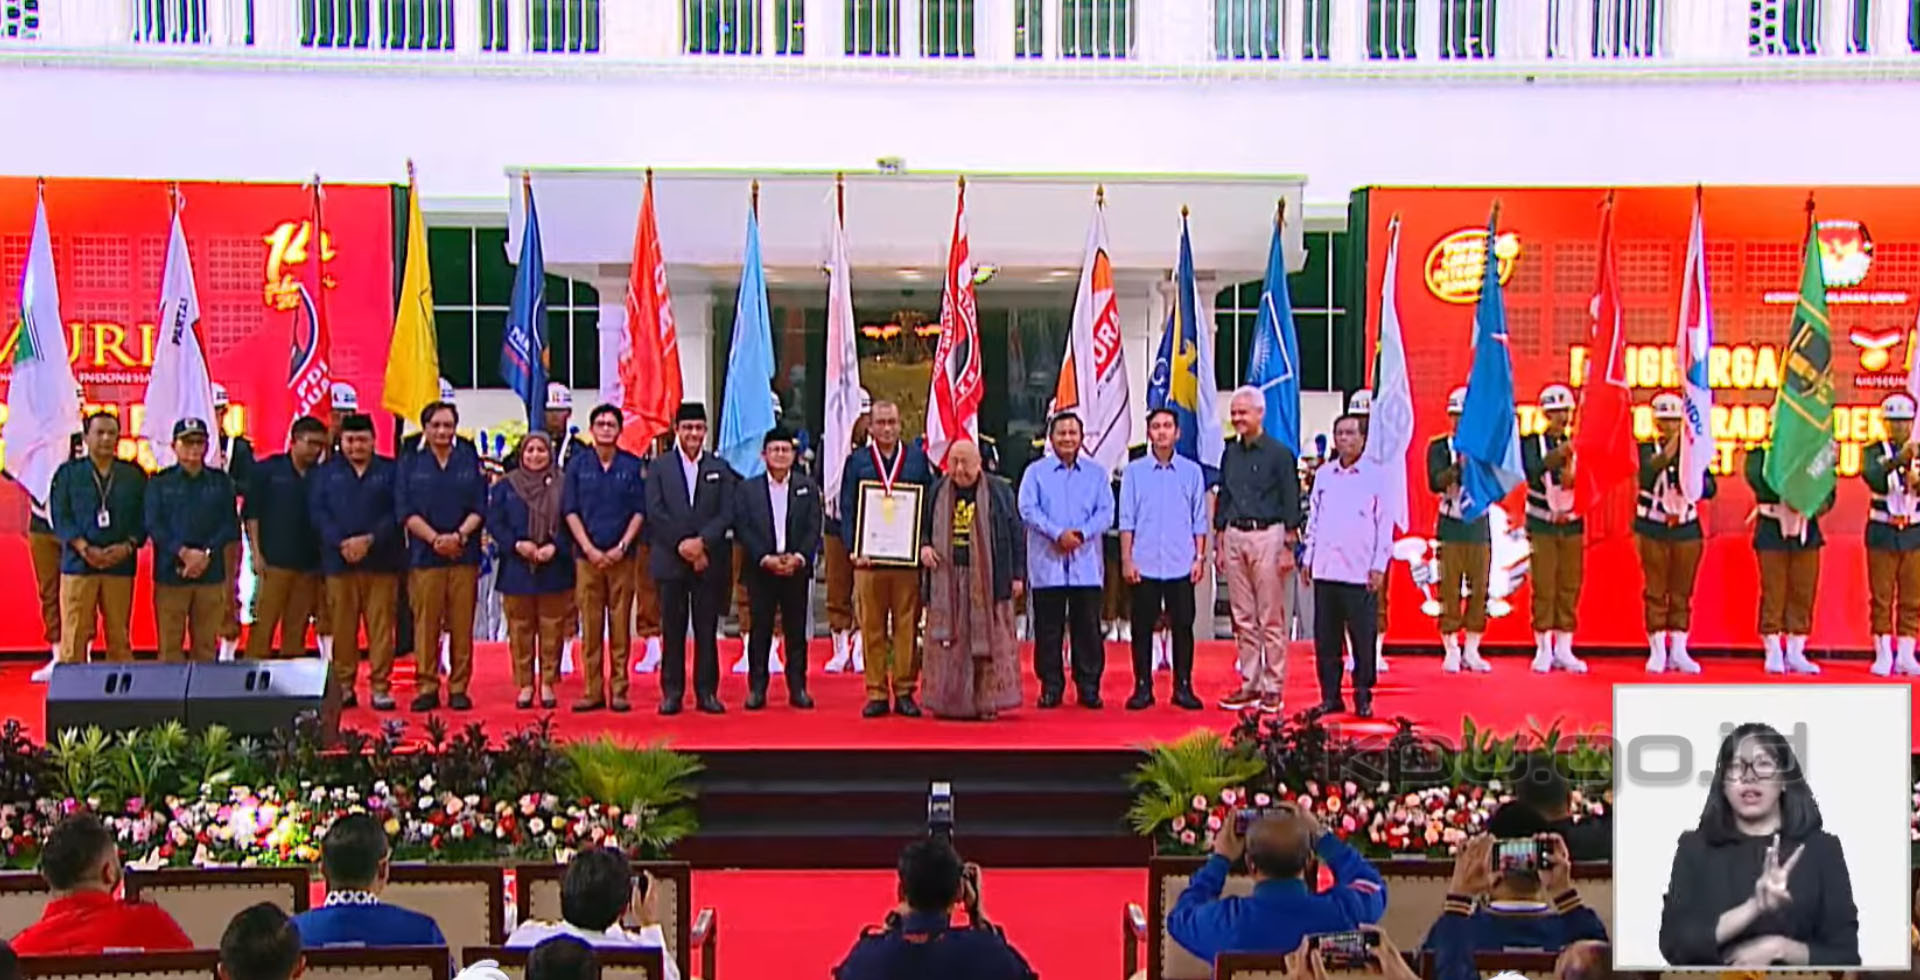 KPU Raih Penghargaan Muri, Kirab Bendera Peserta Pemilu secara Estafet Terbanyak